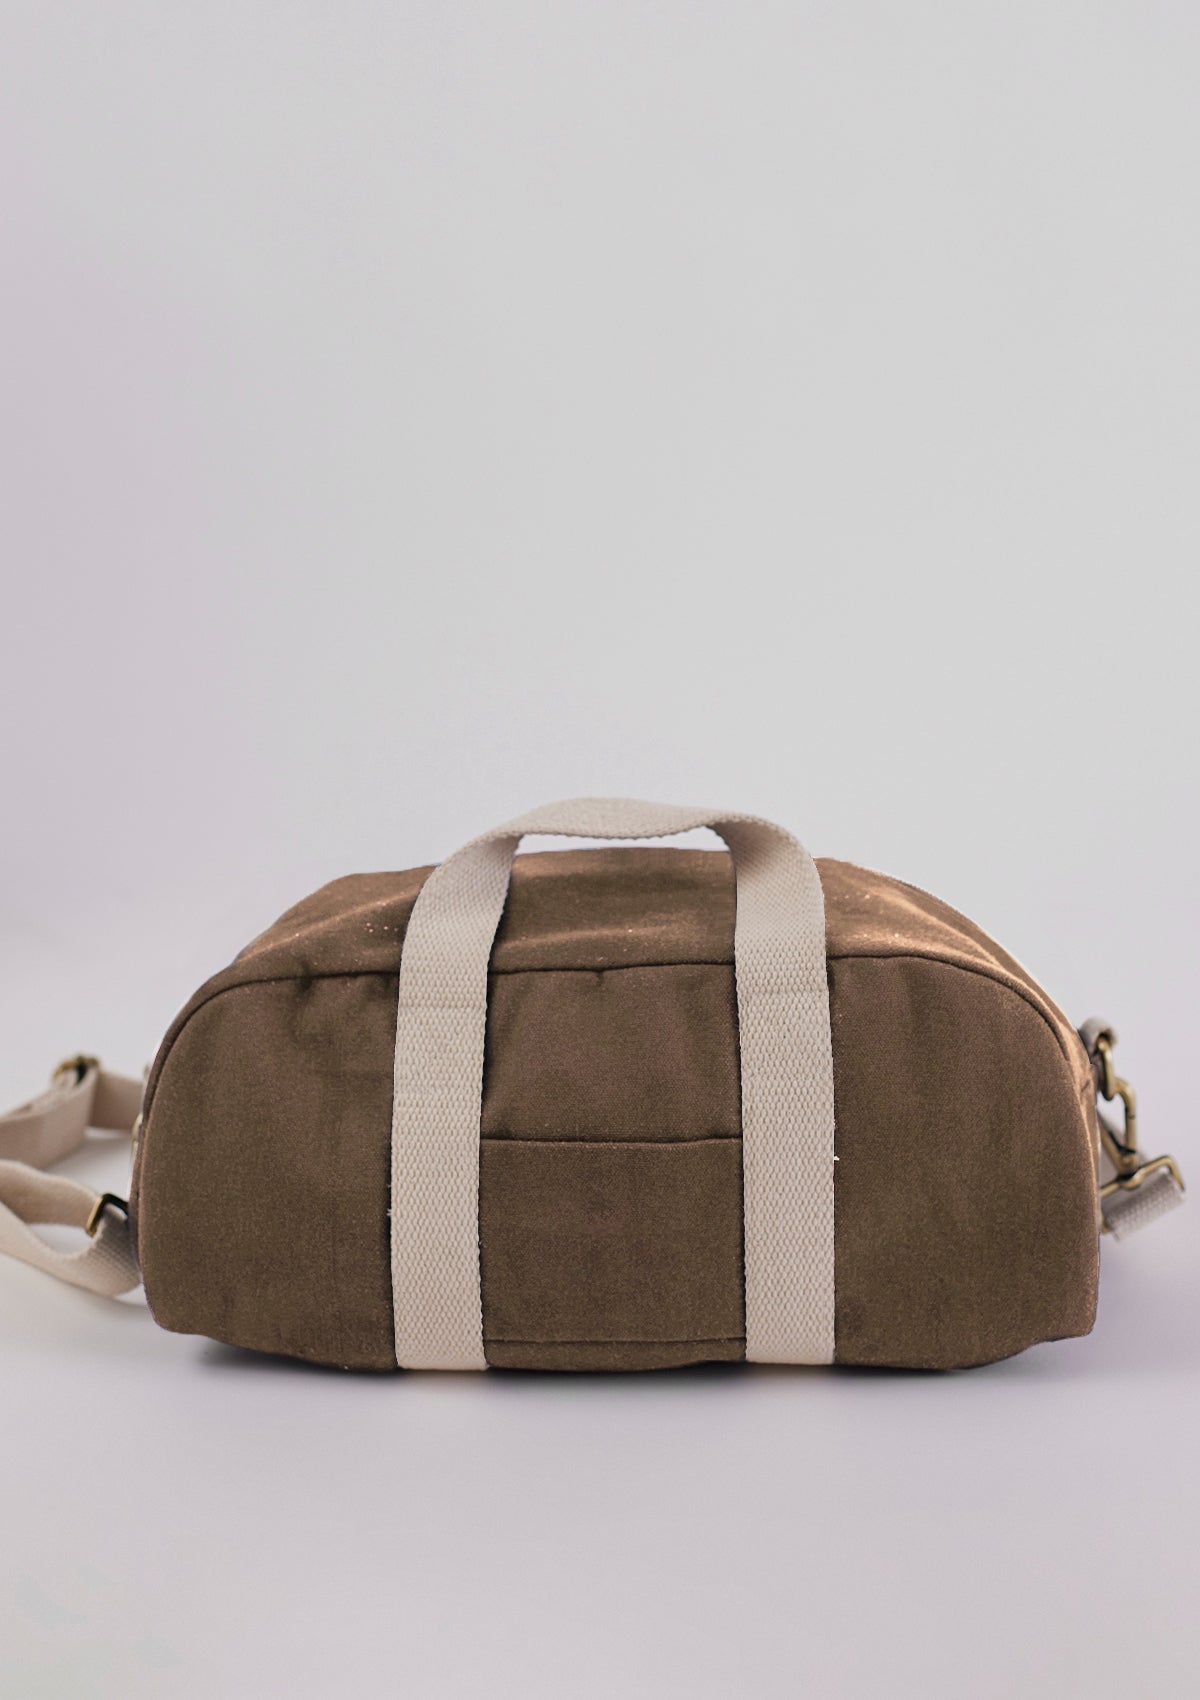 Cappuccino Brown Bowler Bag For Men And Women